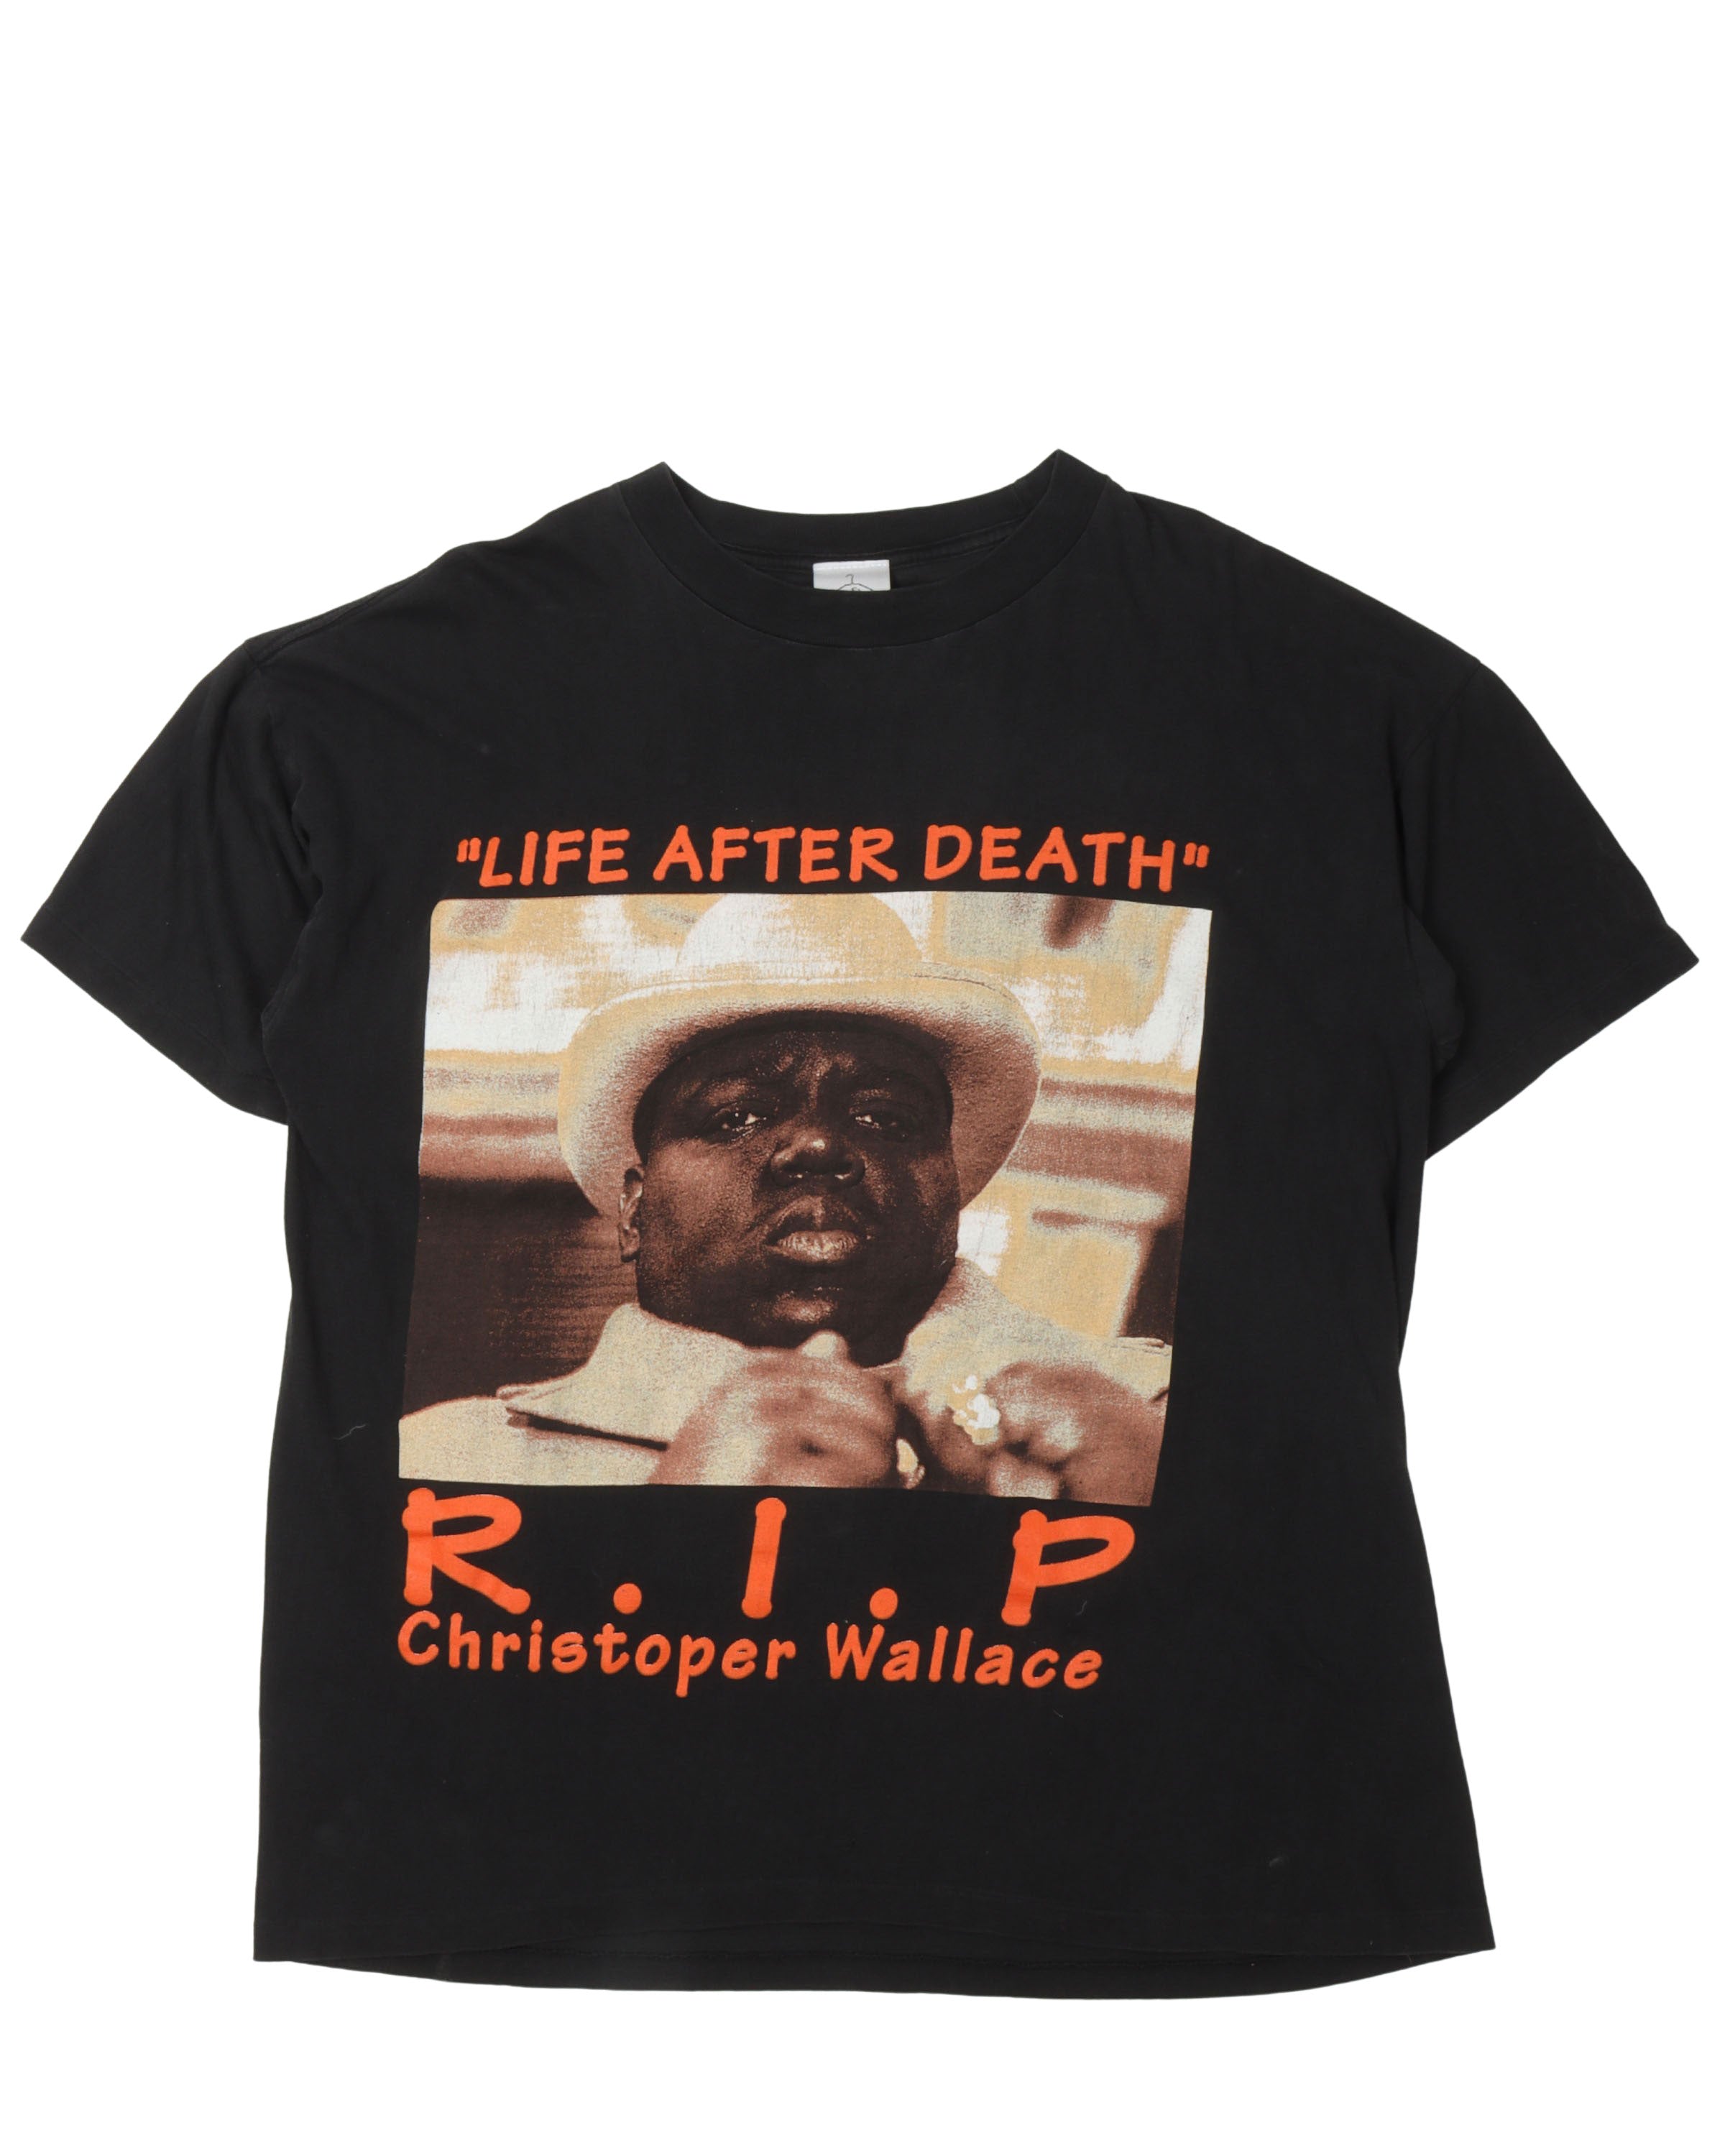 "R.I.P Christopher Wallace" Biggie Smalls Rap T-Shirt